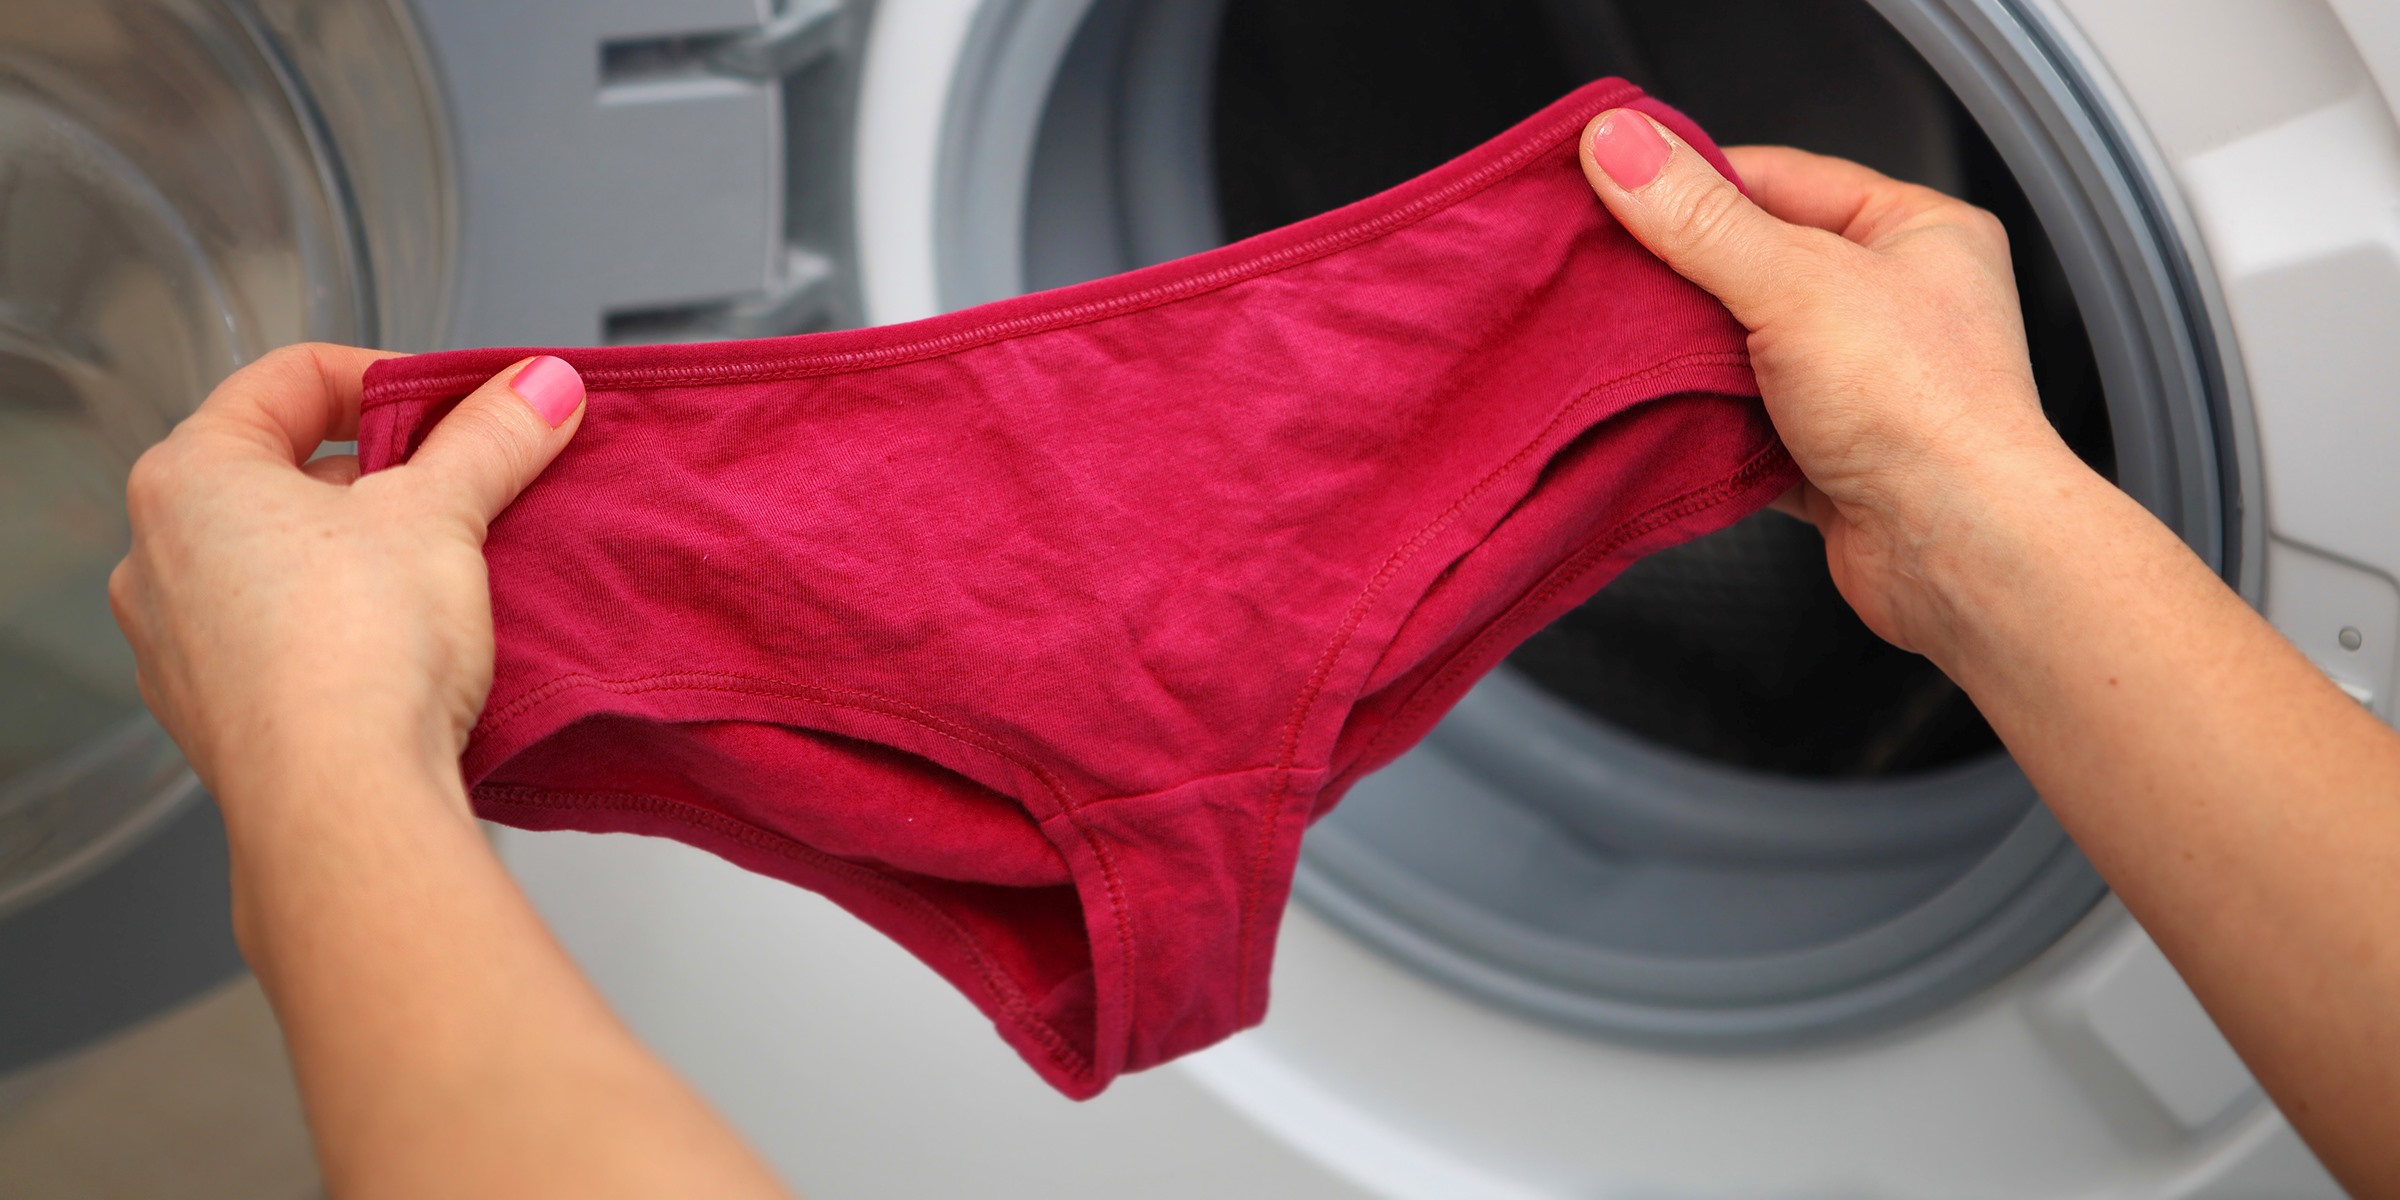 How To Wash Your Underwear